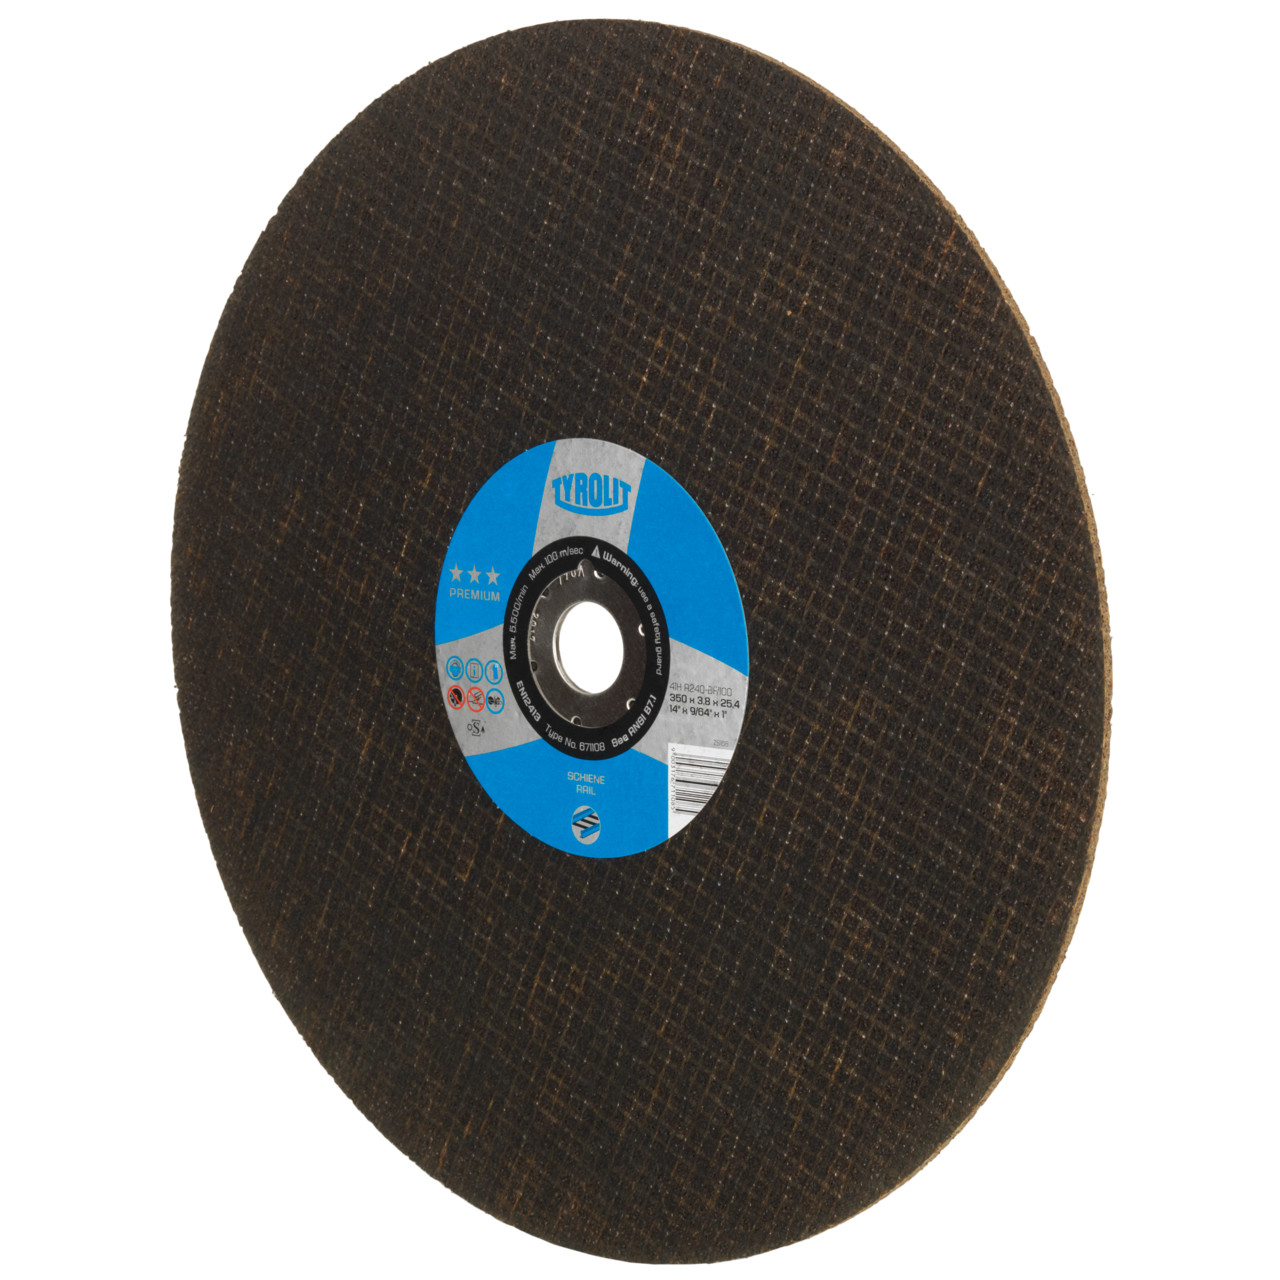 Tyrolit Cutting discs DxDxH 400x4.3x25.4 For rails, shape: 41 - straight version, Art. 676428